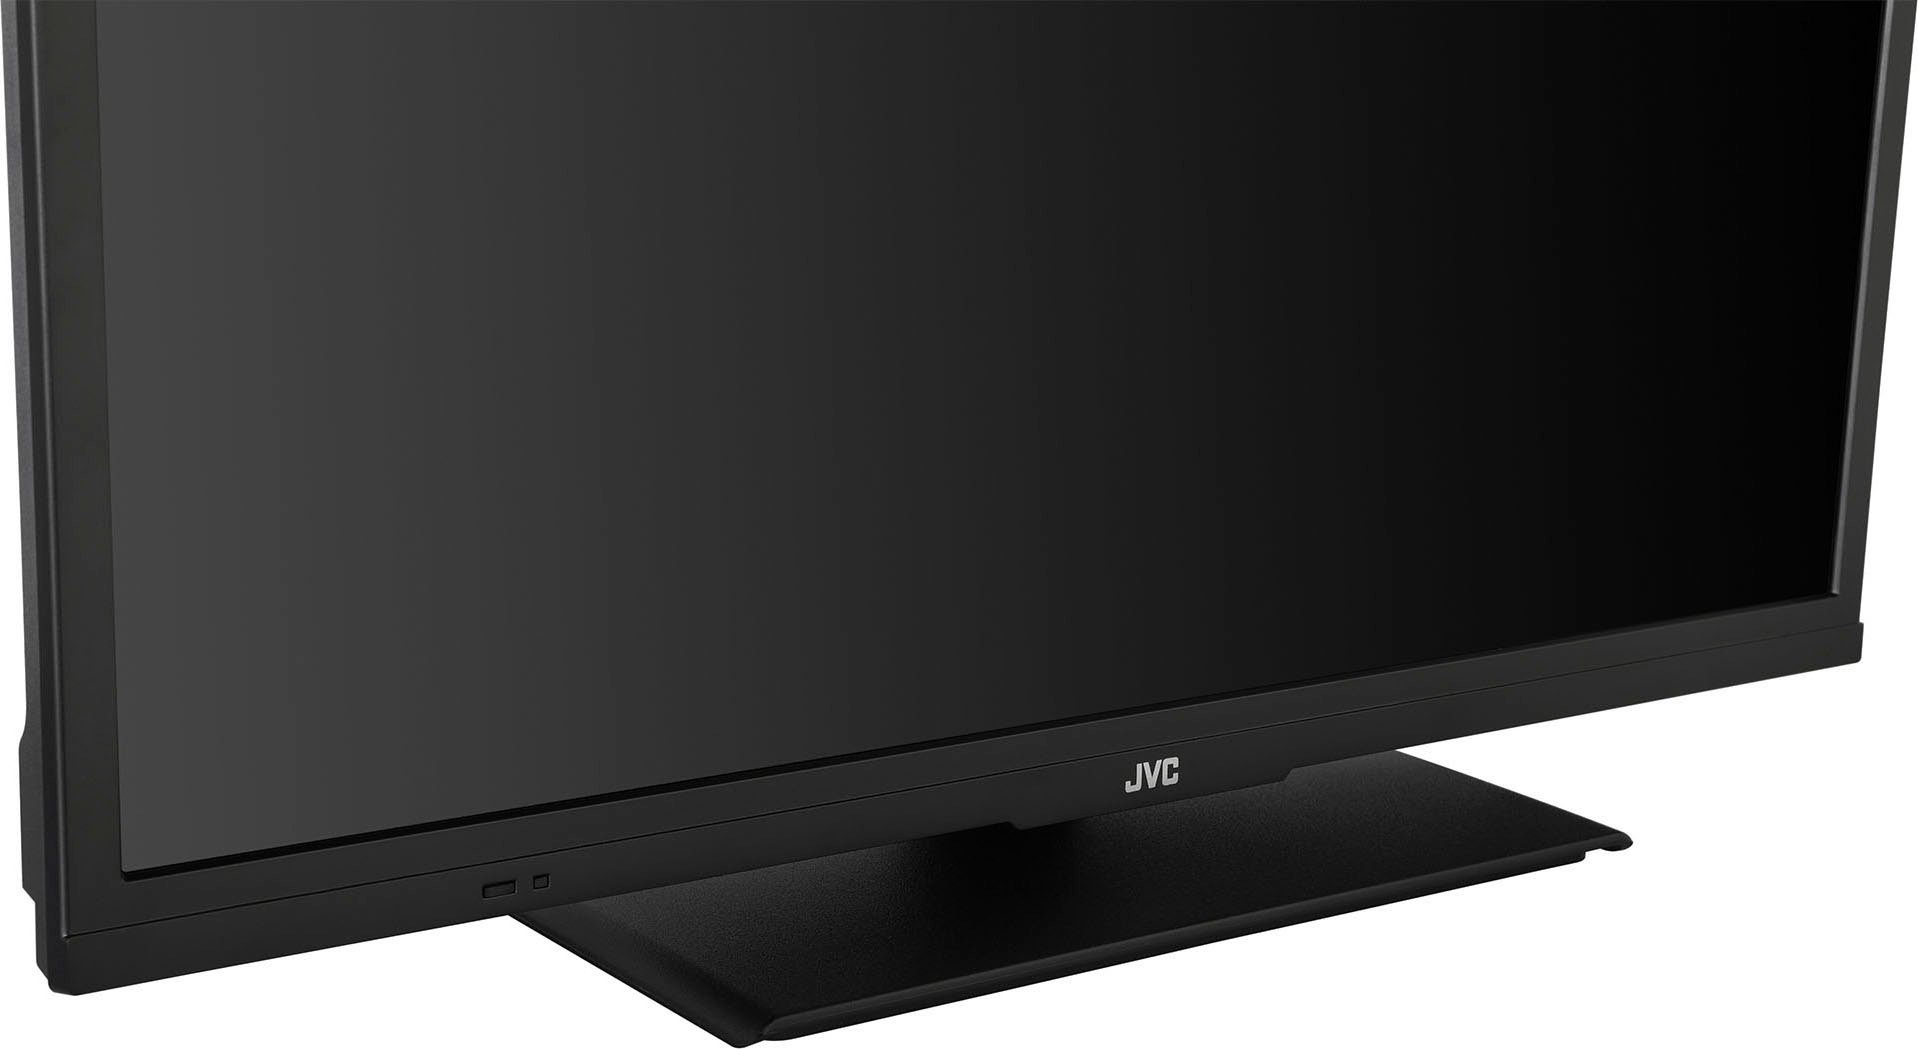 HD JVC (60 cm/24 LT-24VH5156 Zoll, LED-Fernseher Smart-TV) ready,